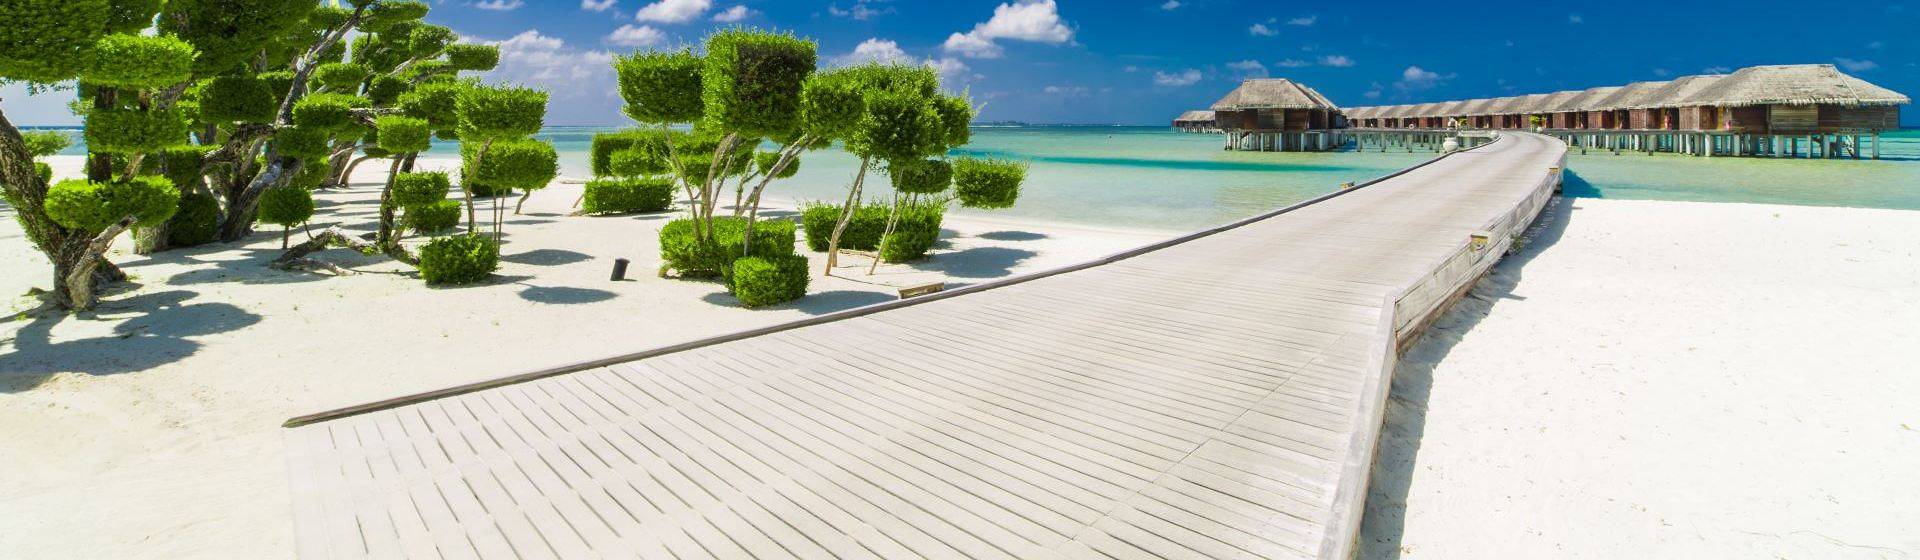 Holidays to South Ari Atoll Image